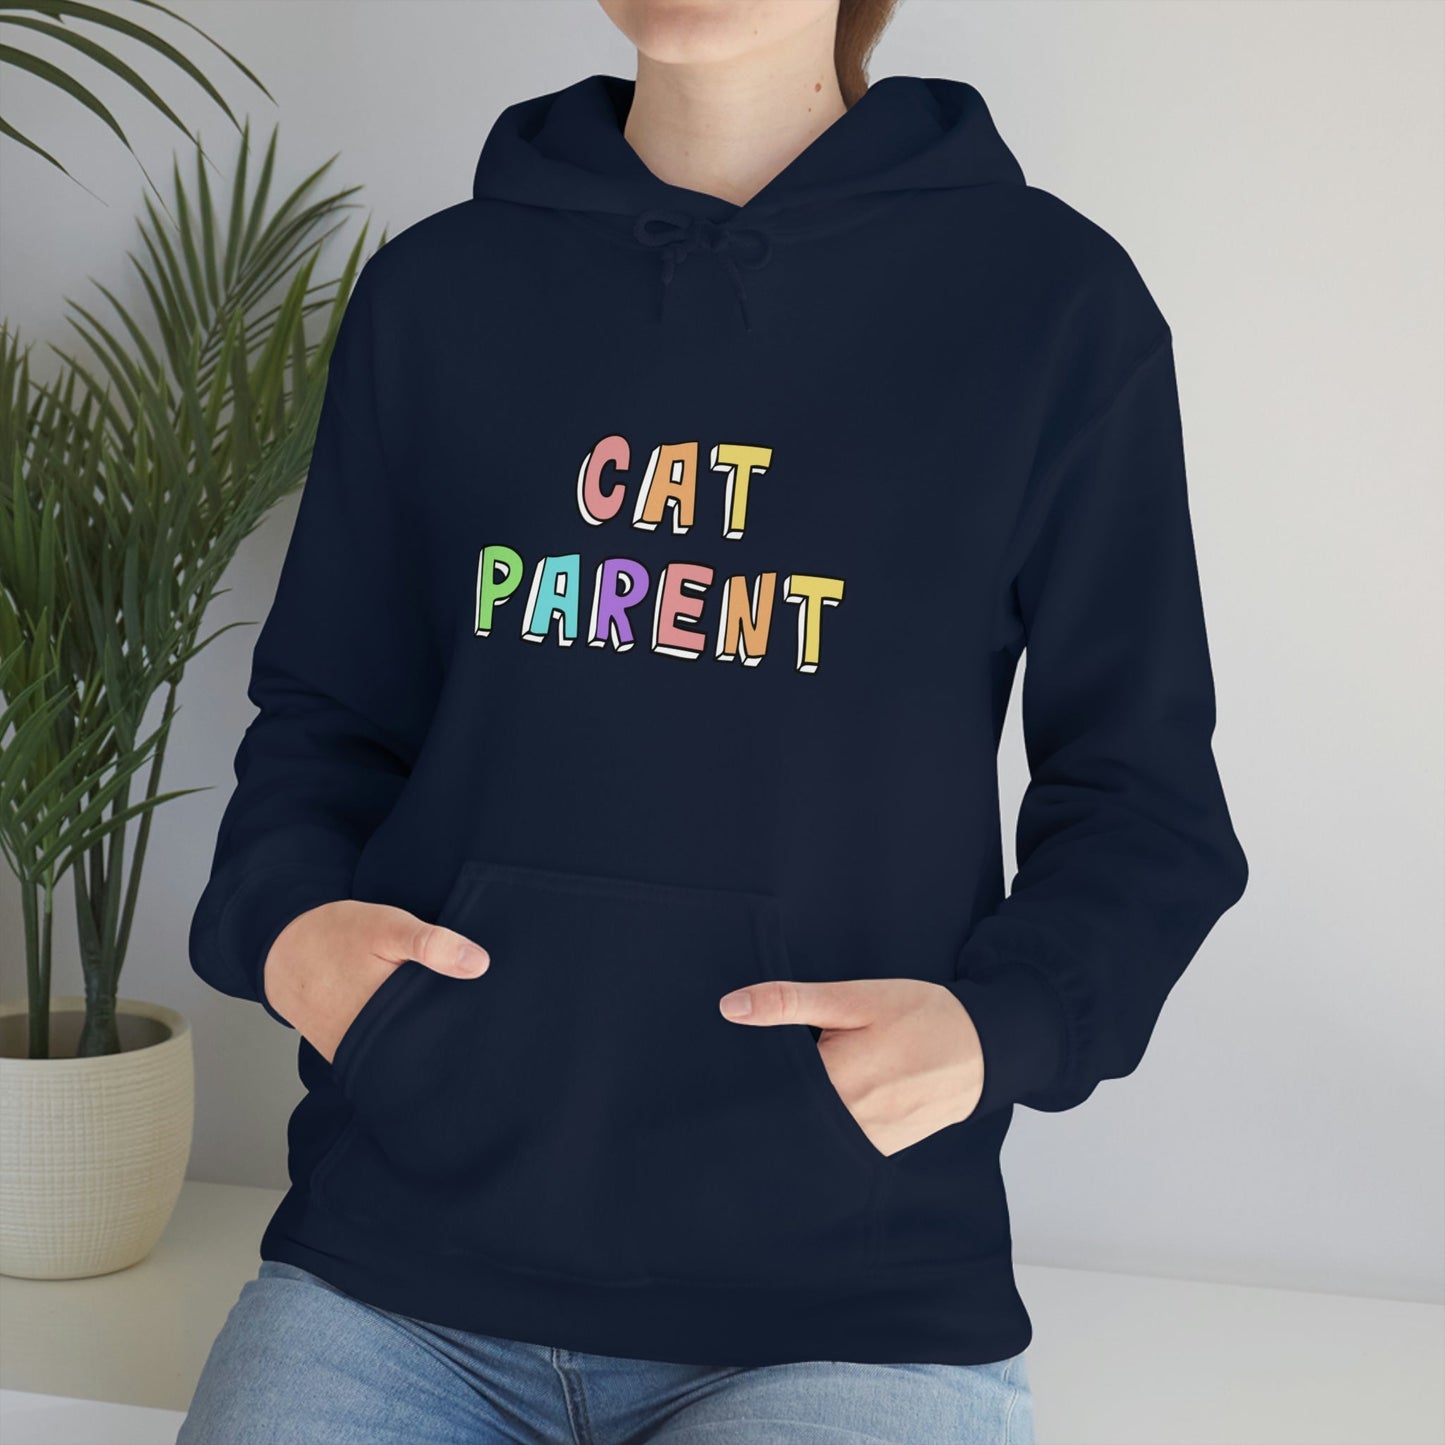 Cat Parent | Hooded Sweatshirt - Detezi Designs-24363020652394477286